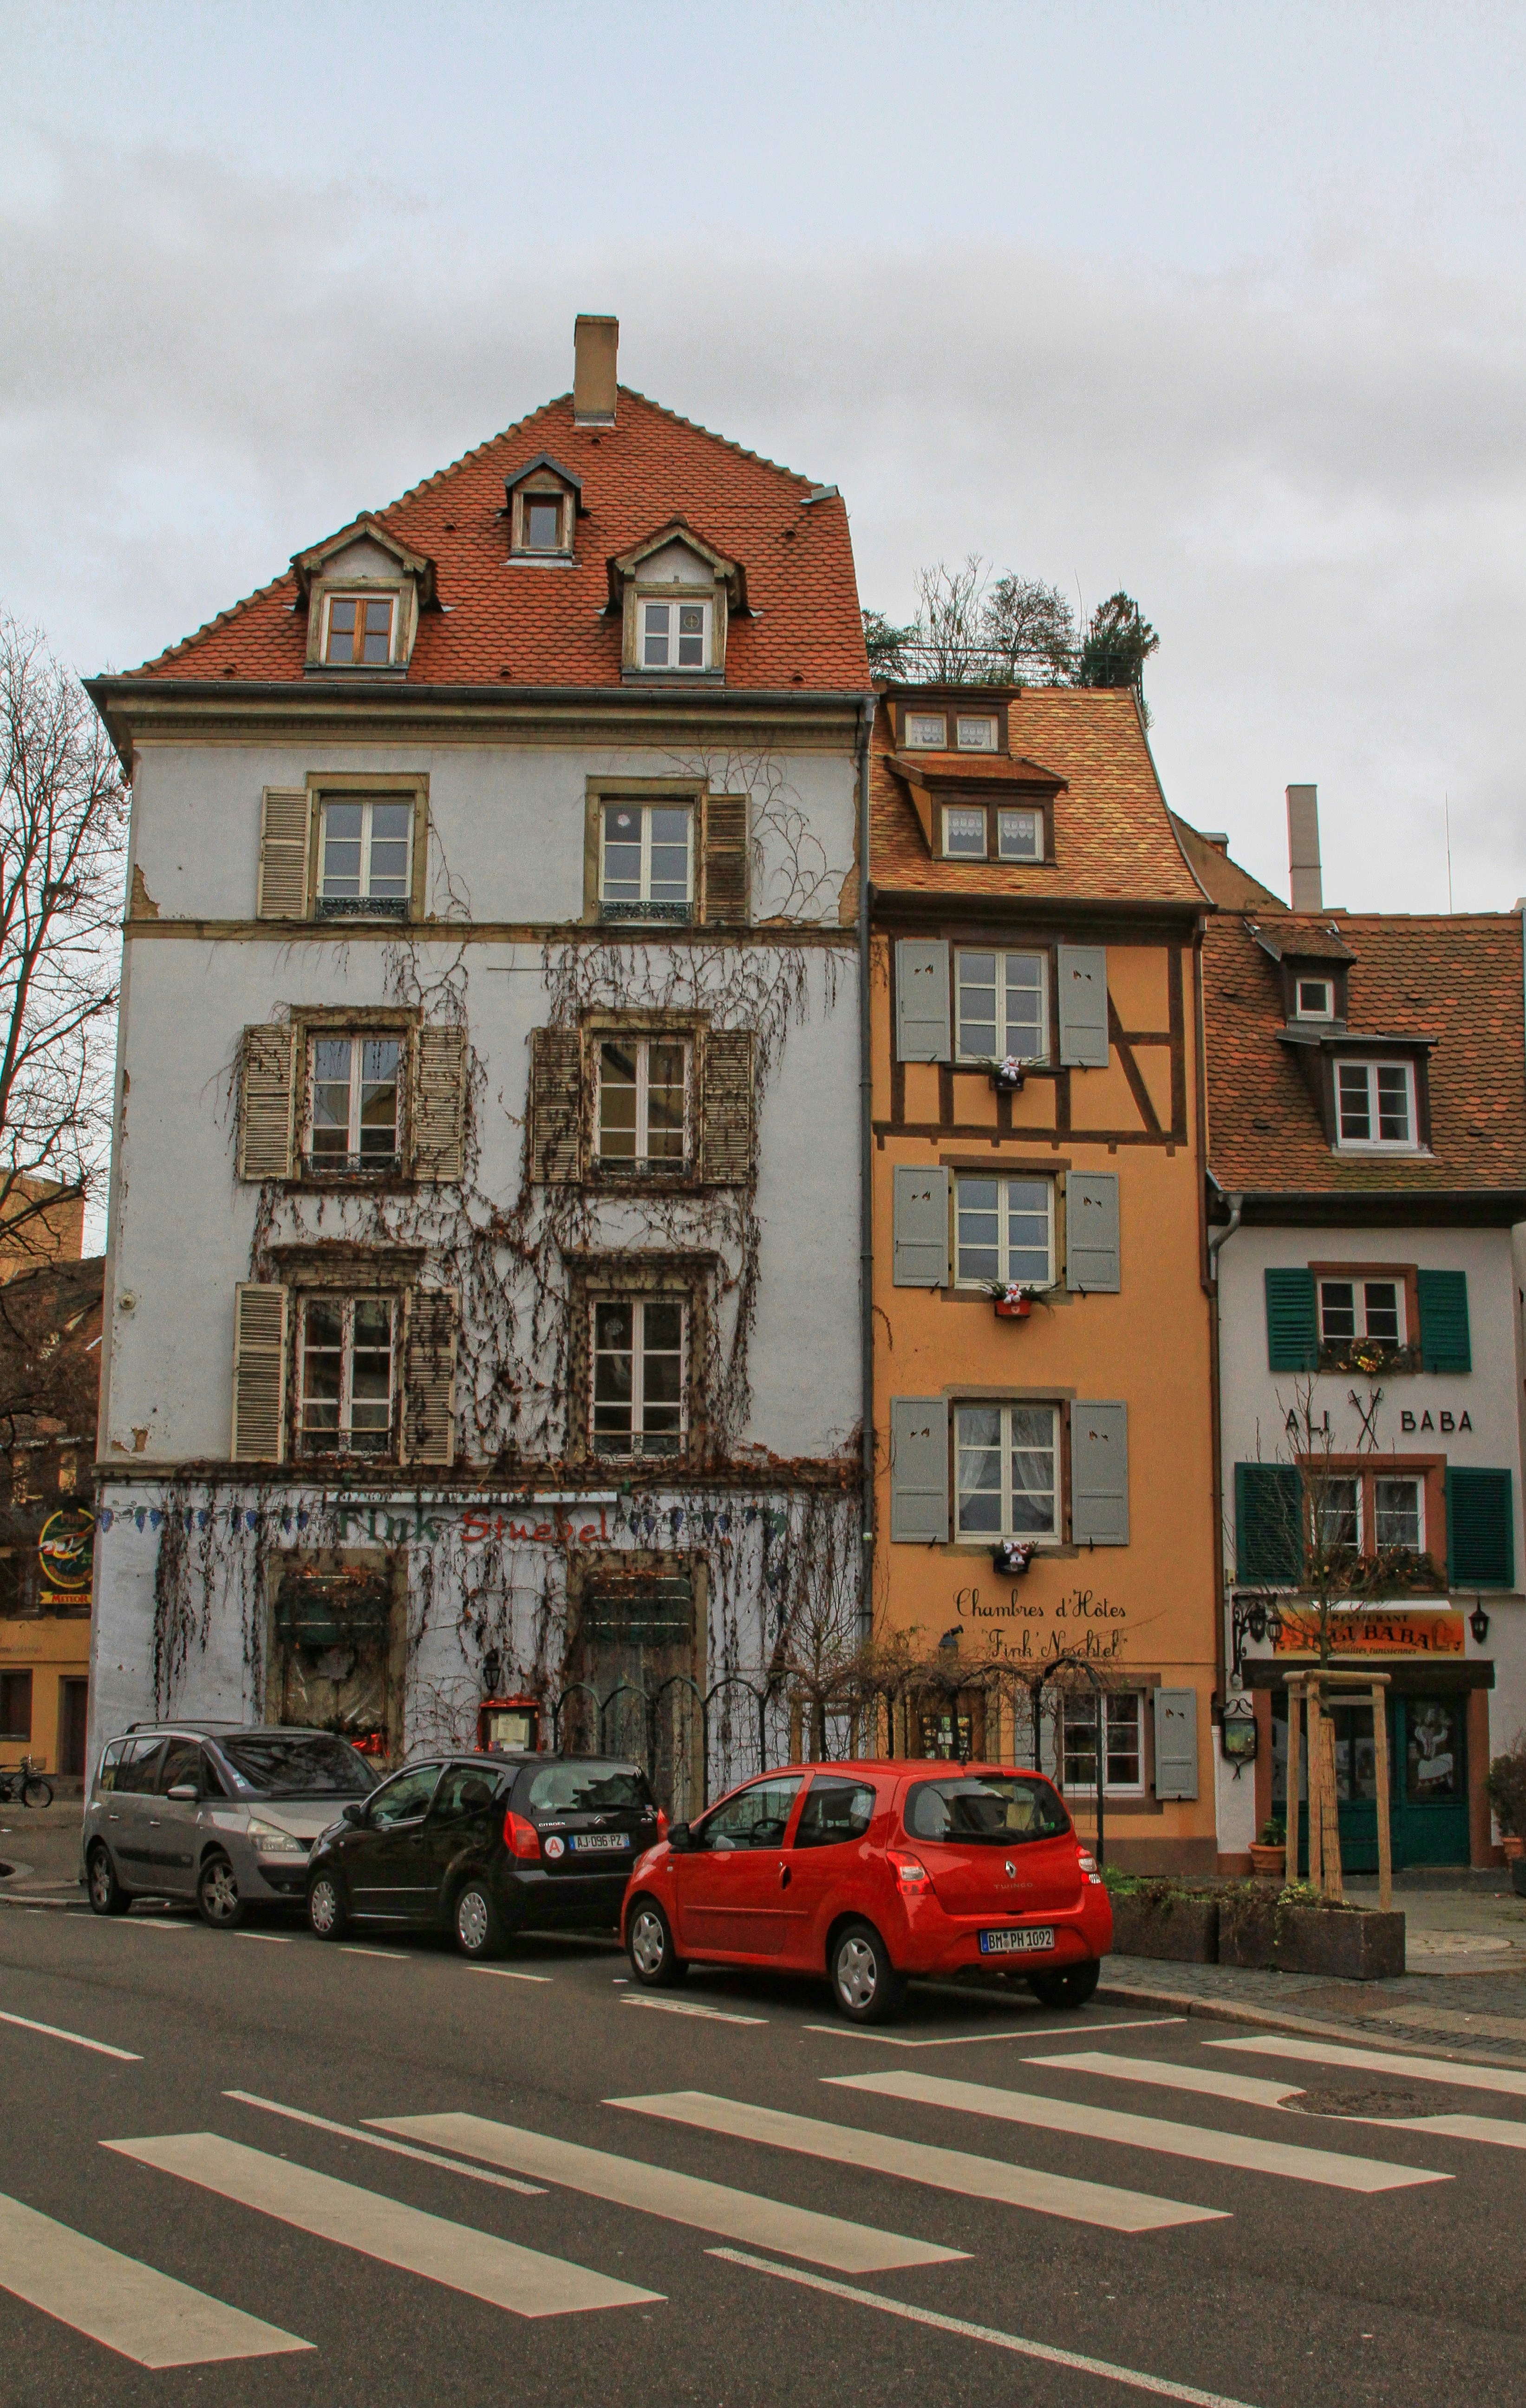 The houses on street in Strasbourg, France.